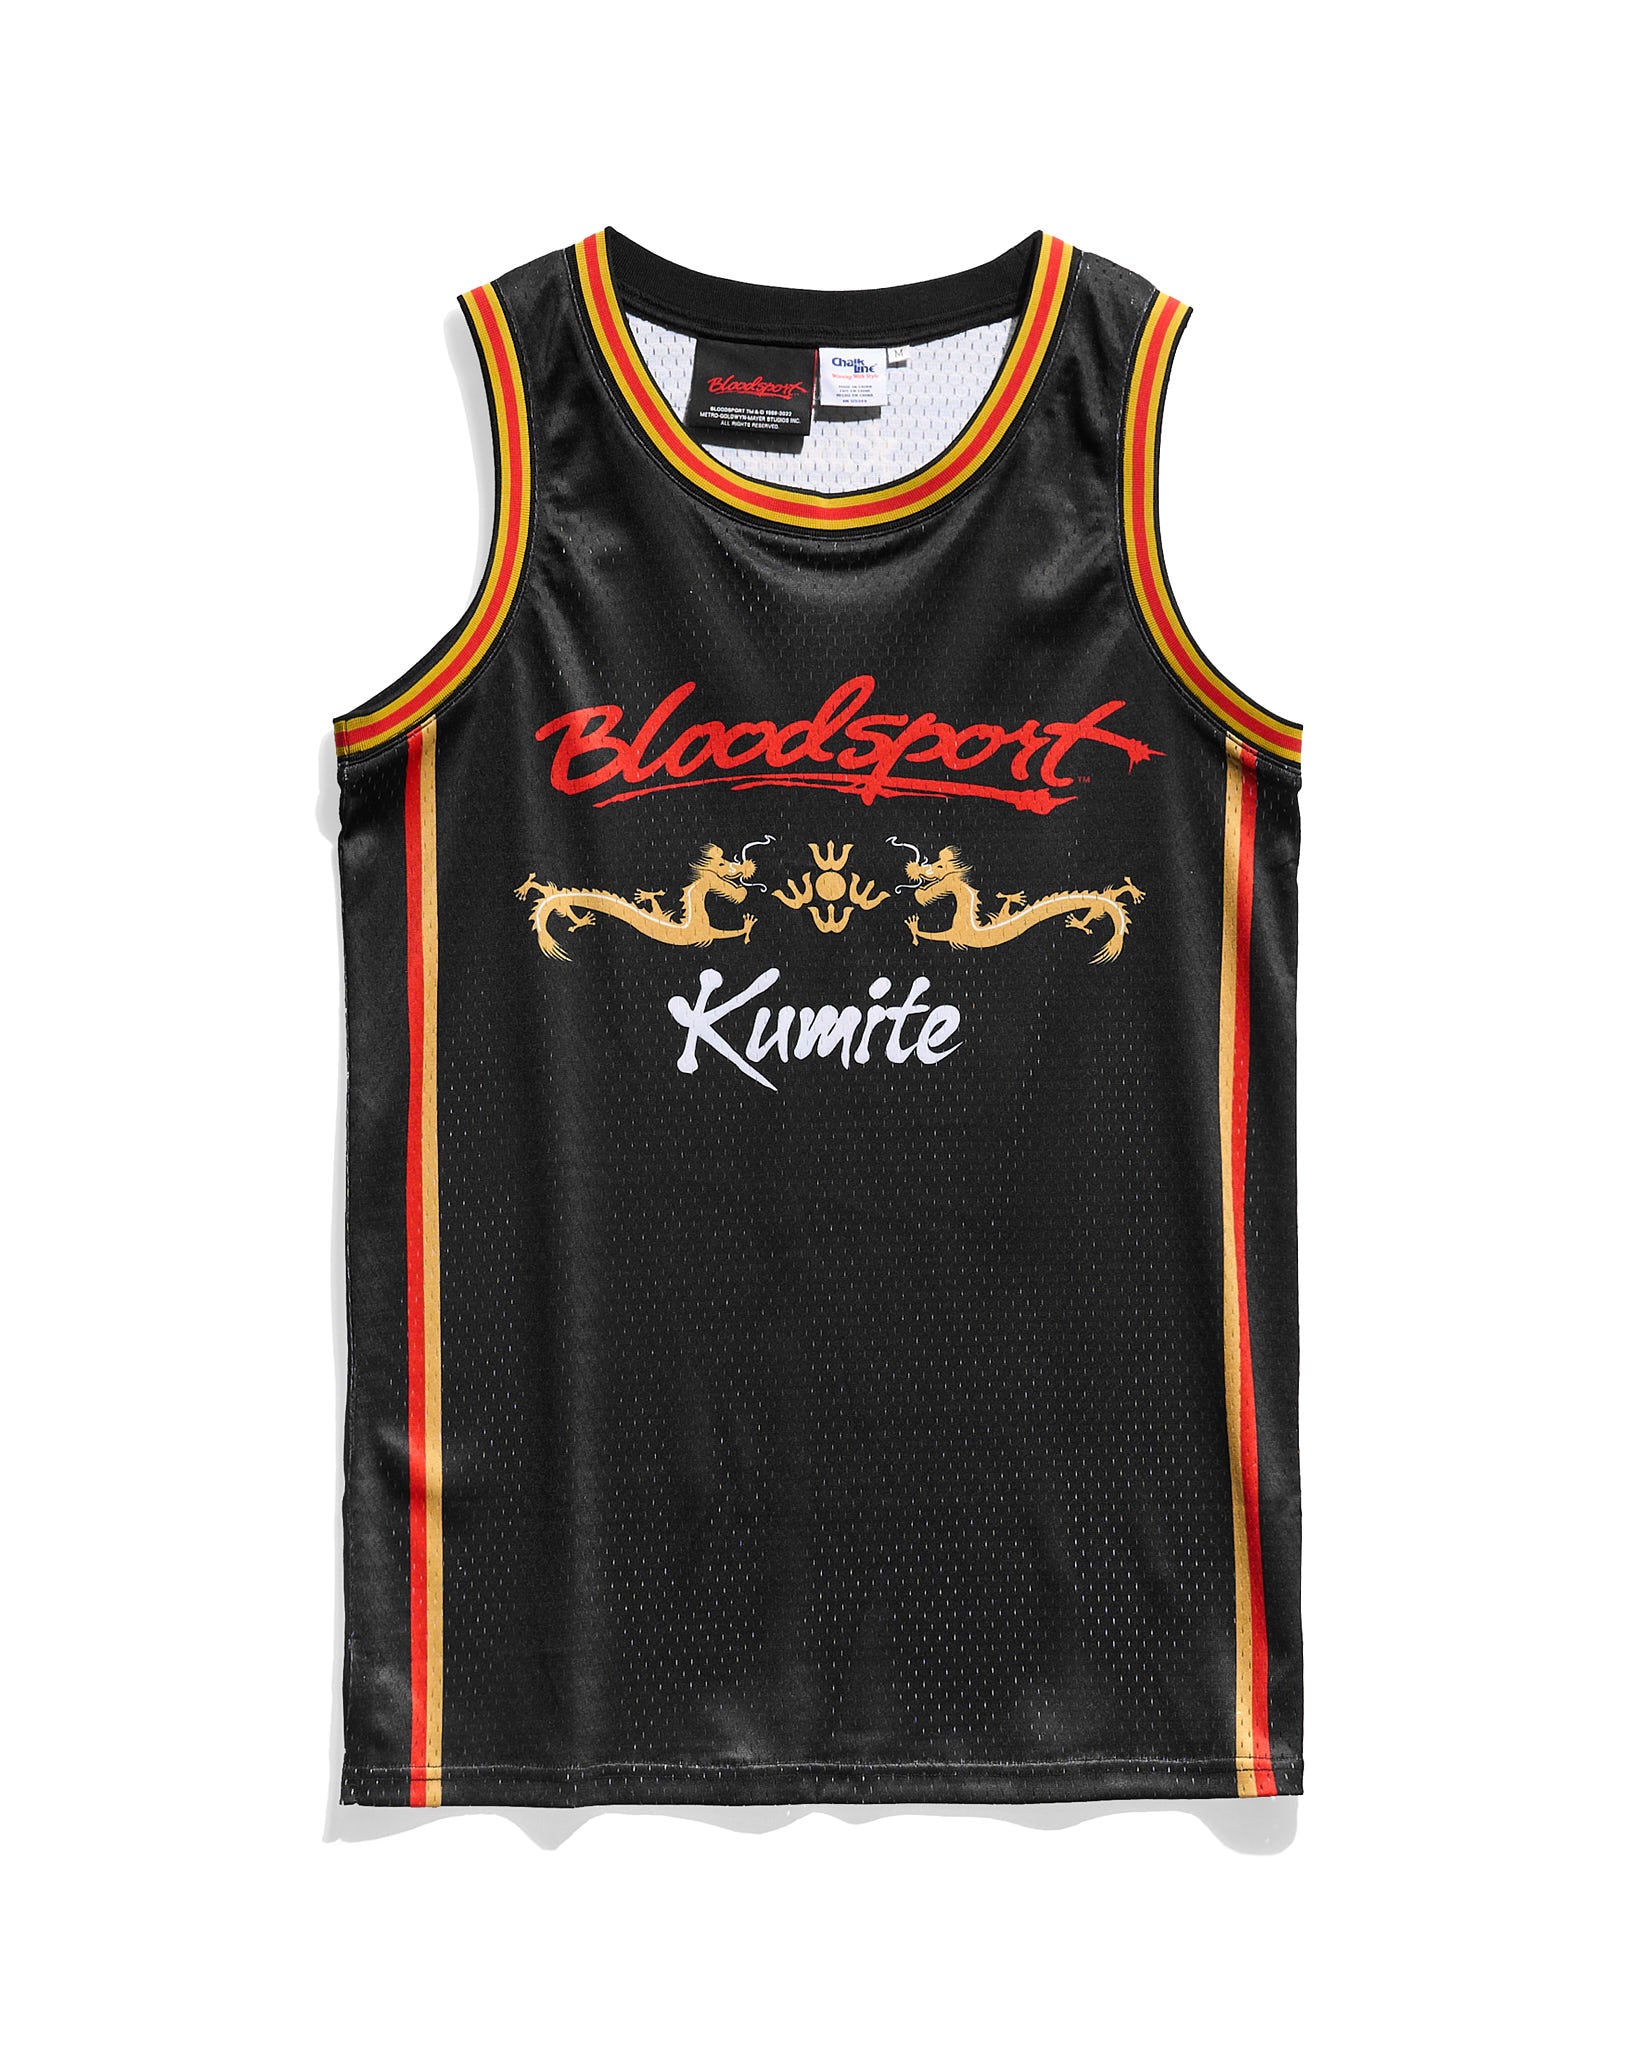 Bloodsport Kumite Venice Jersey